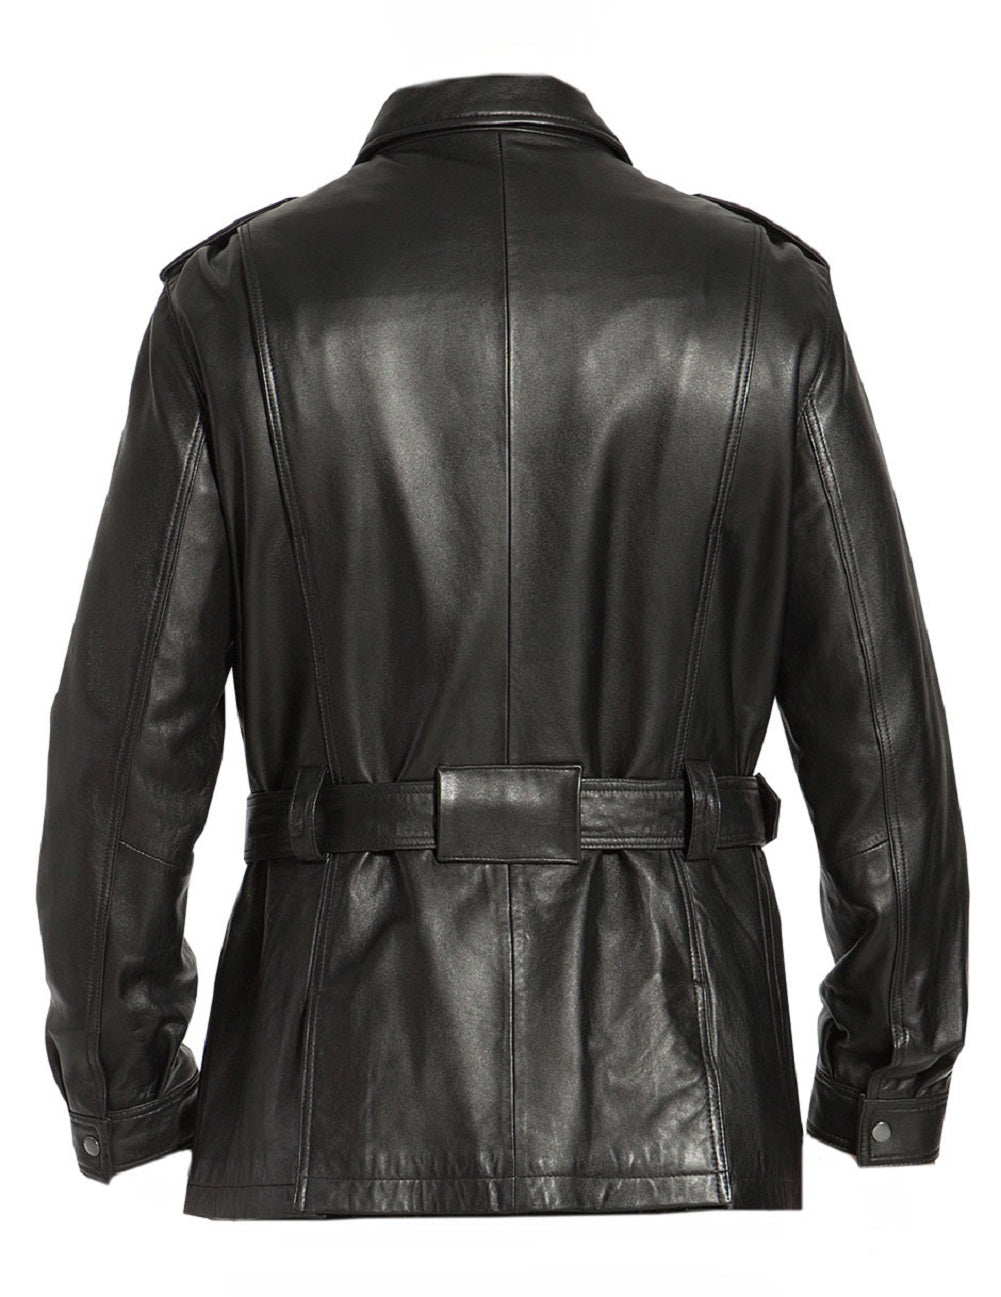 Classyak Men Fashion Original Leather Jacket Classic Coat